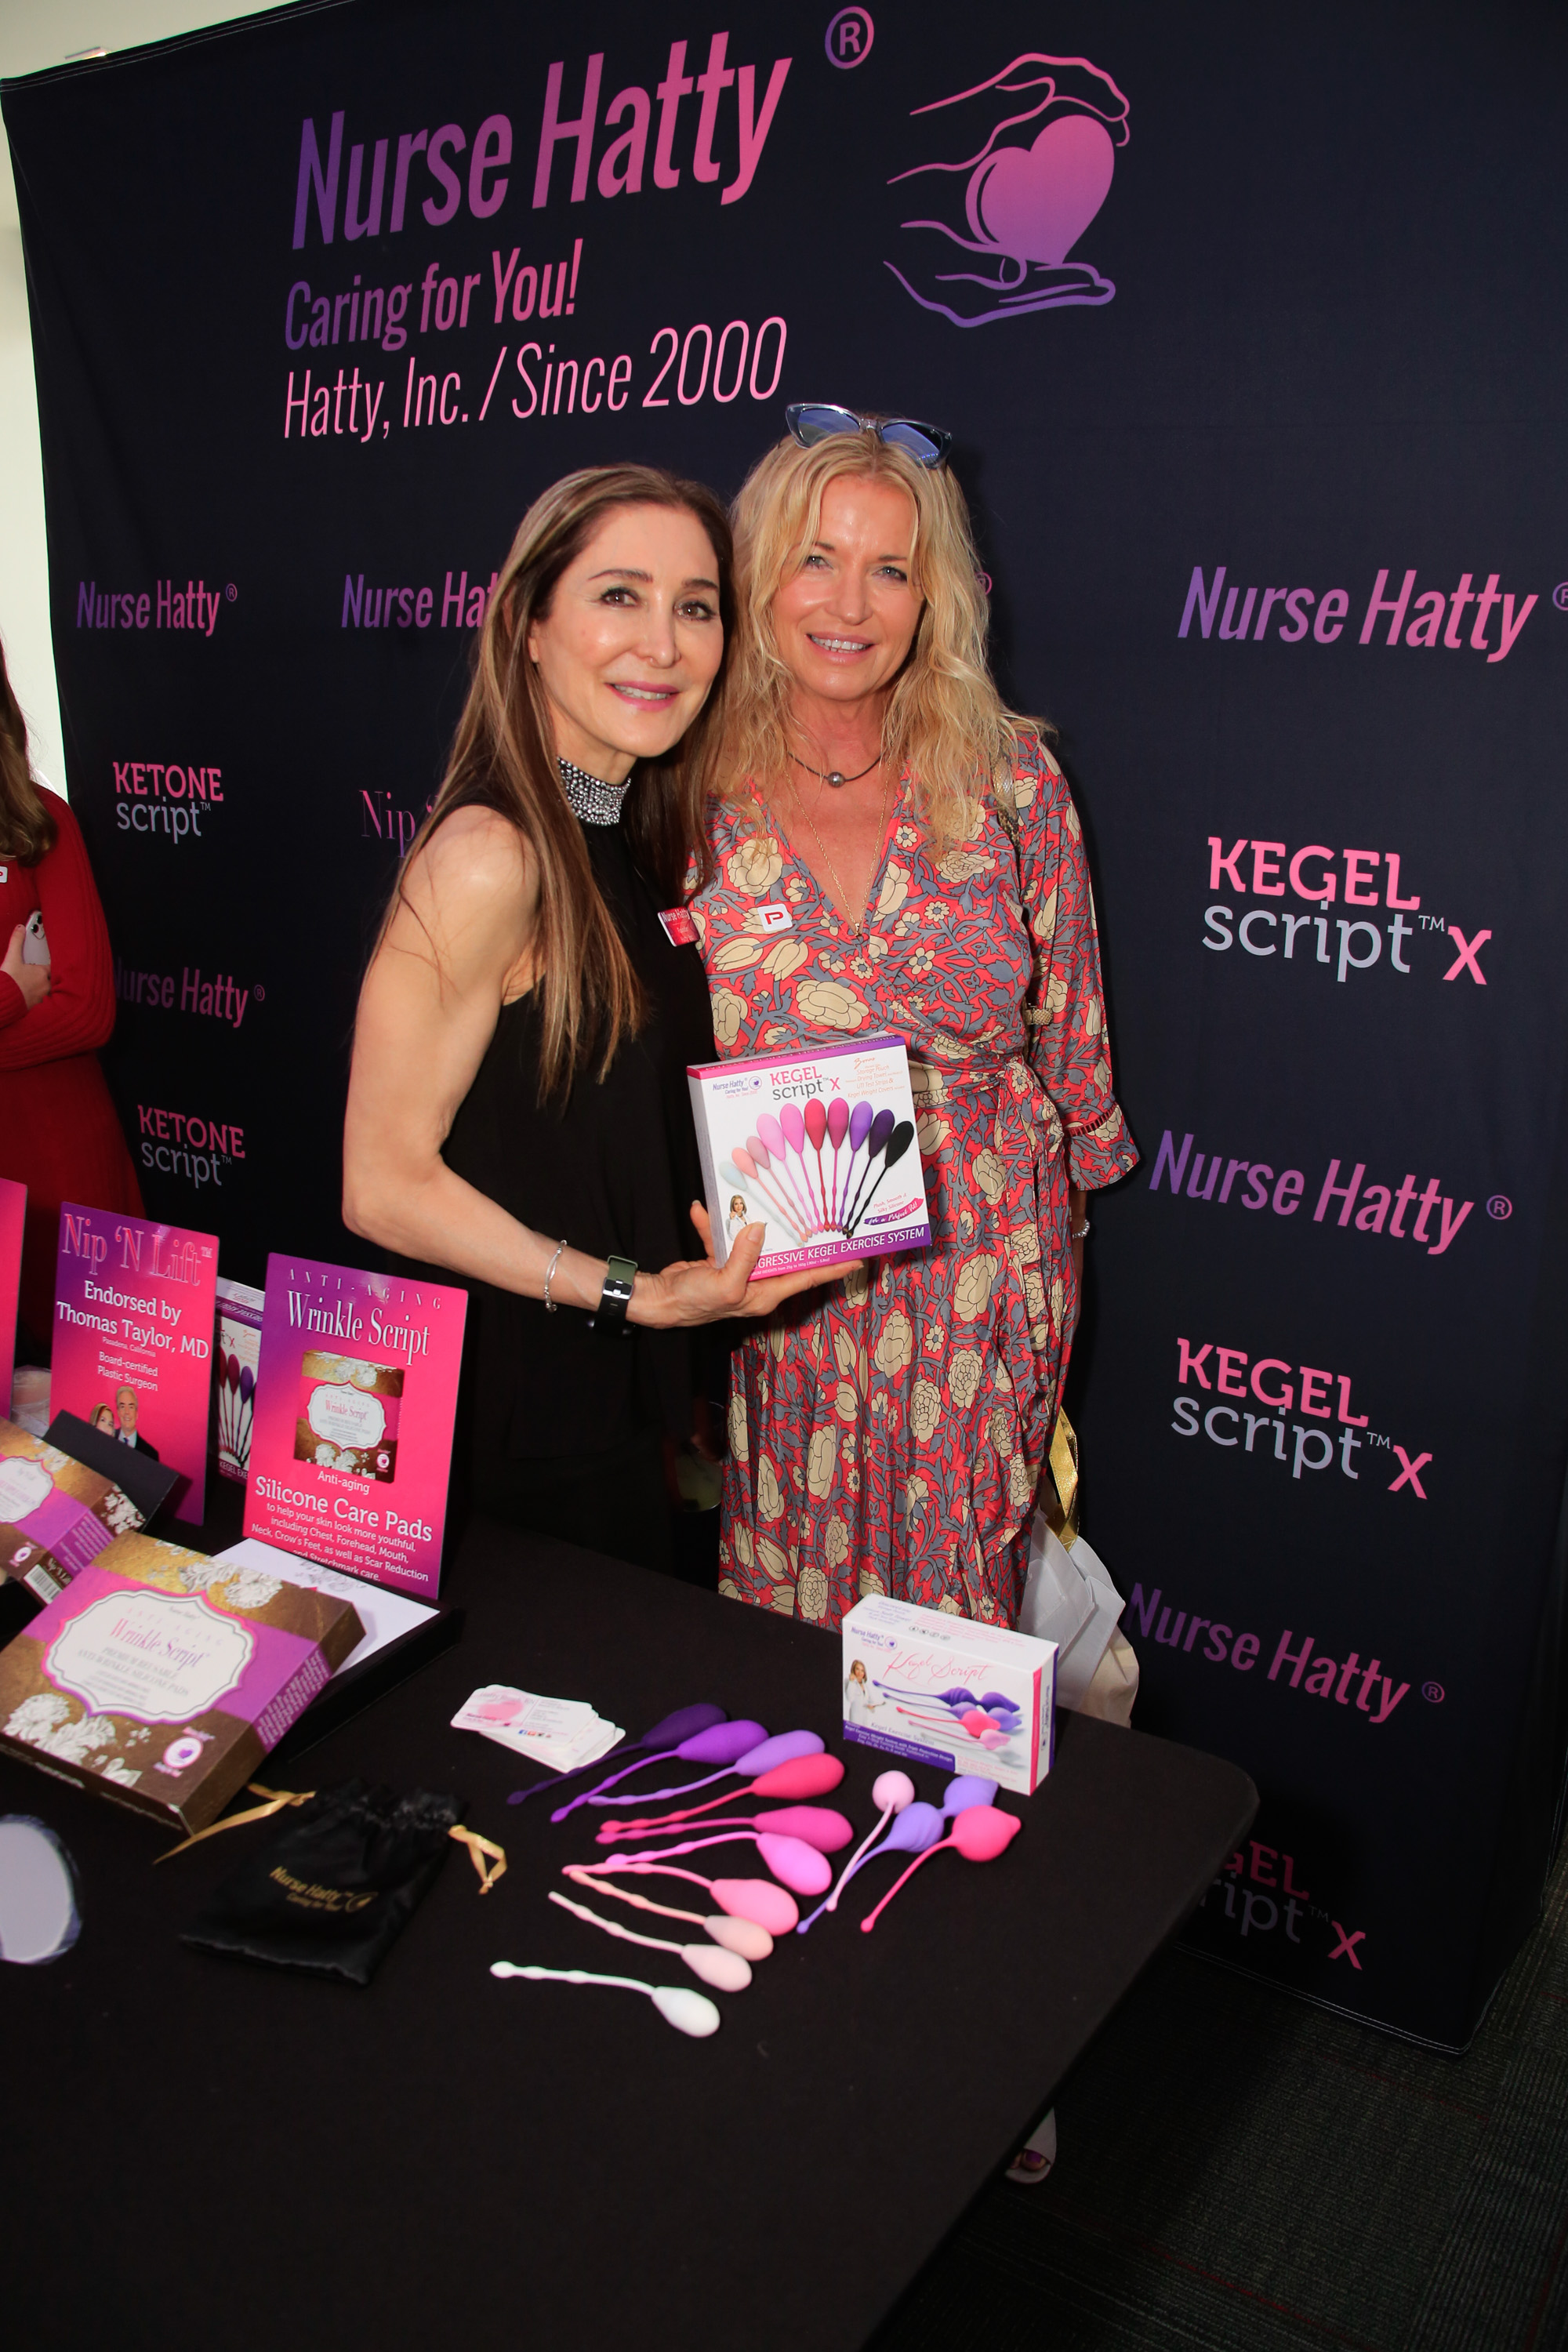 Nurse Hatty with Celebrity displaying Kegel Script X .